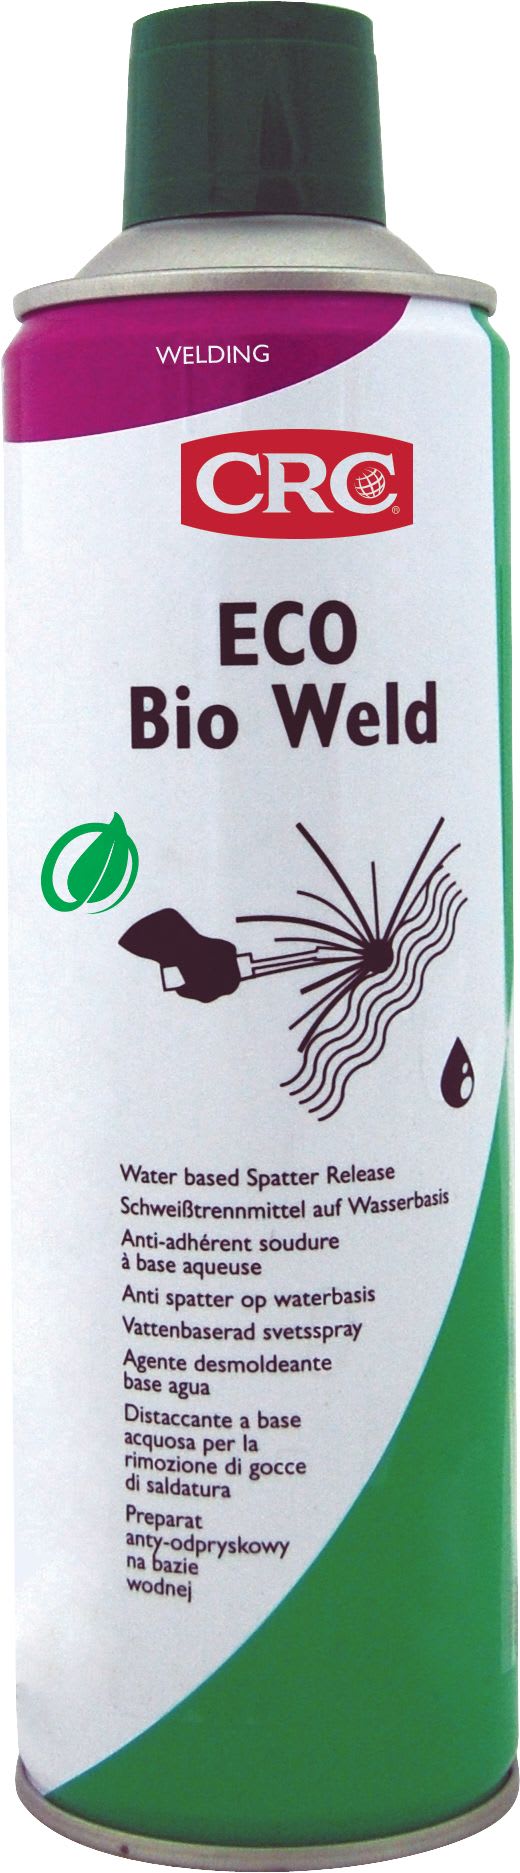 Kf - ECO Bio Weld 20 L